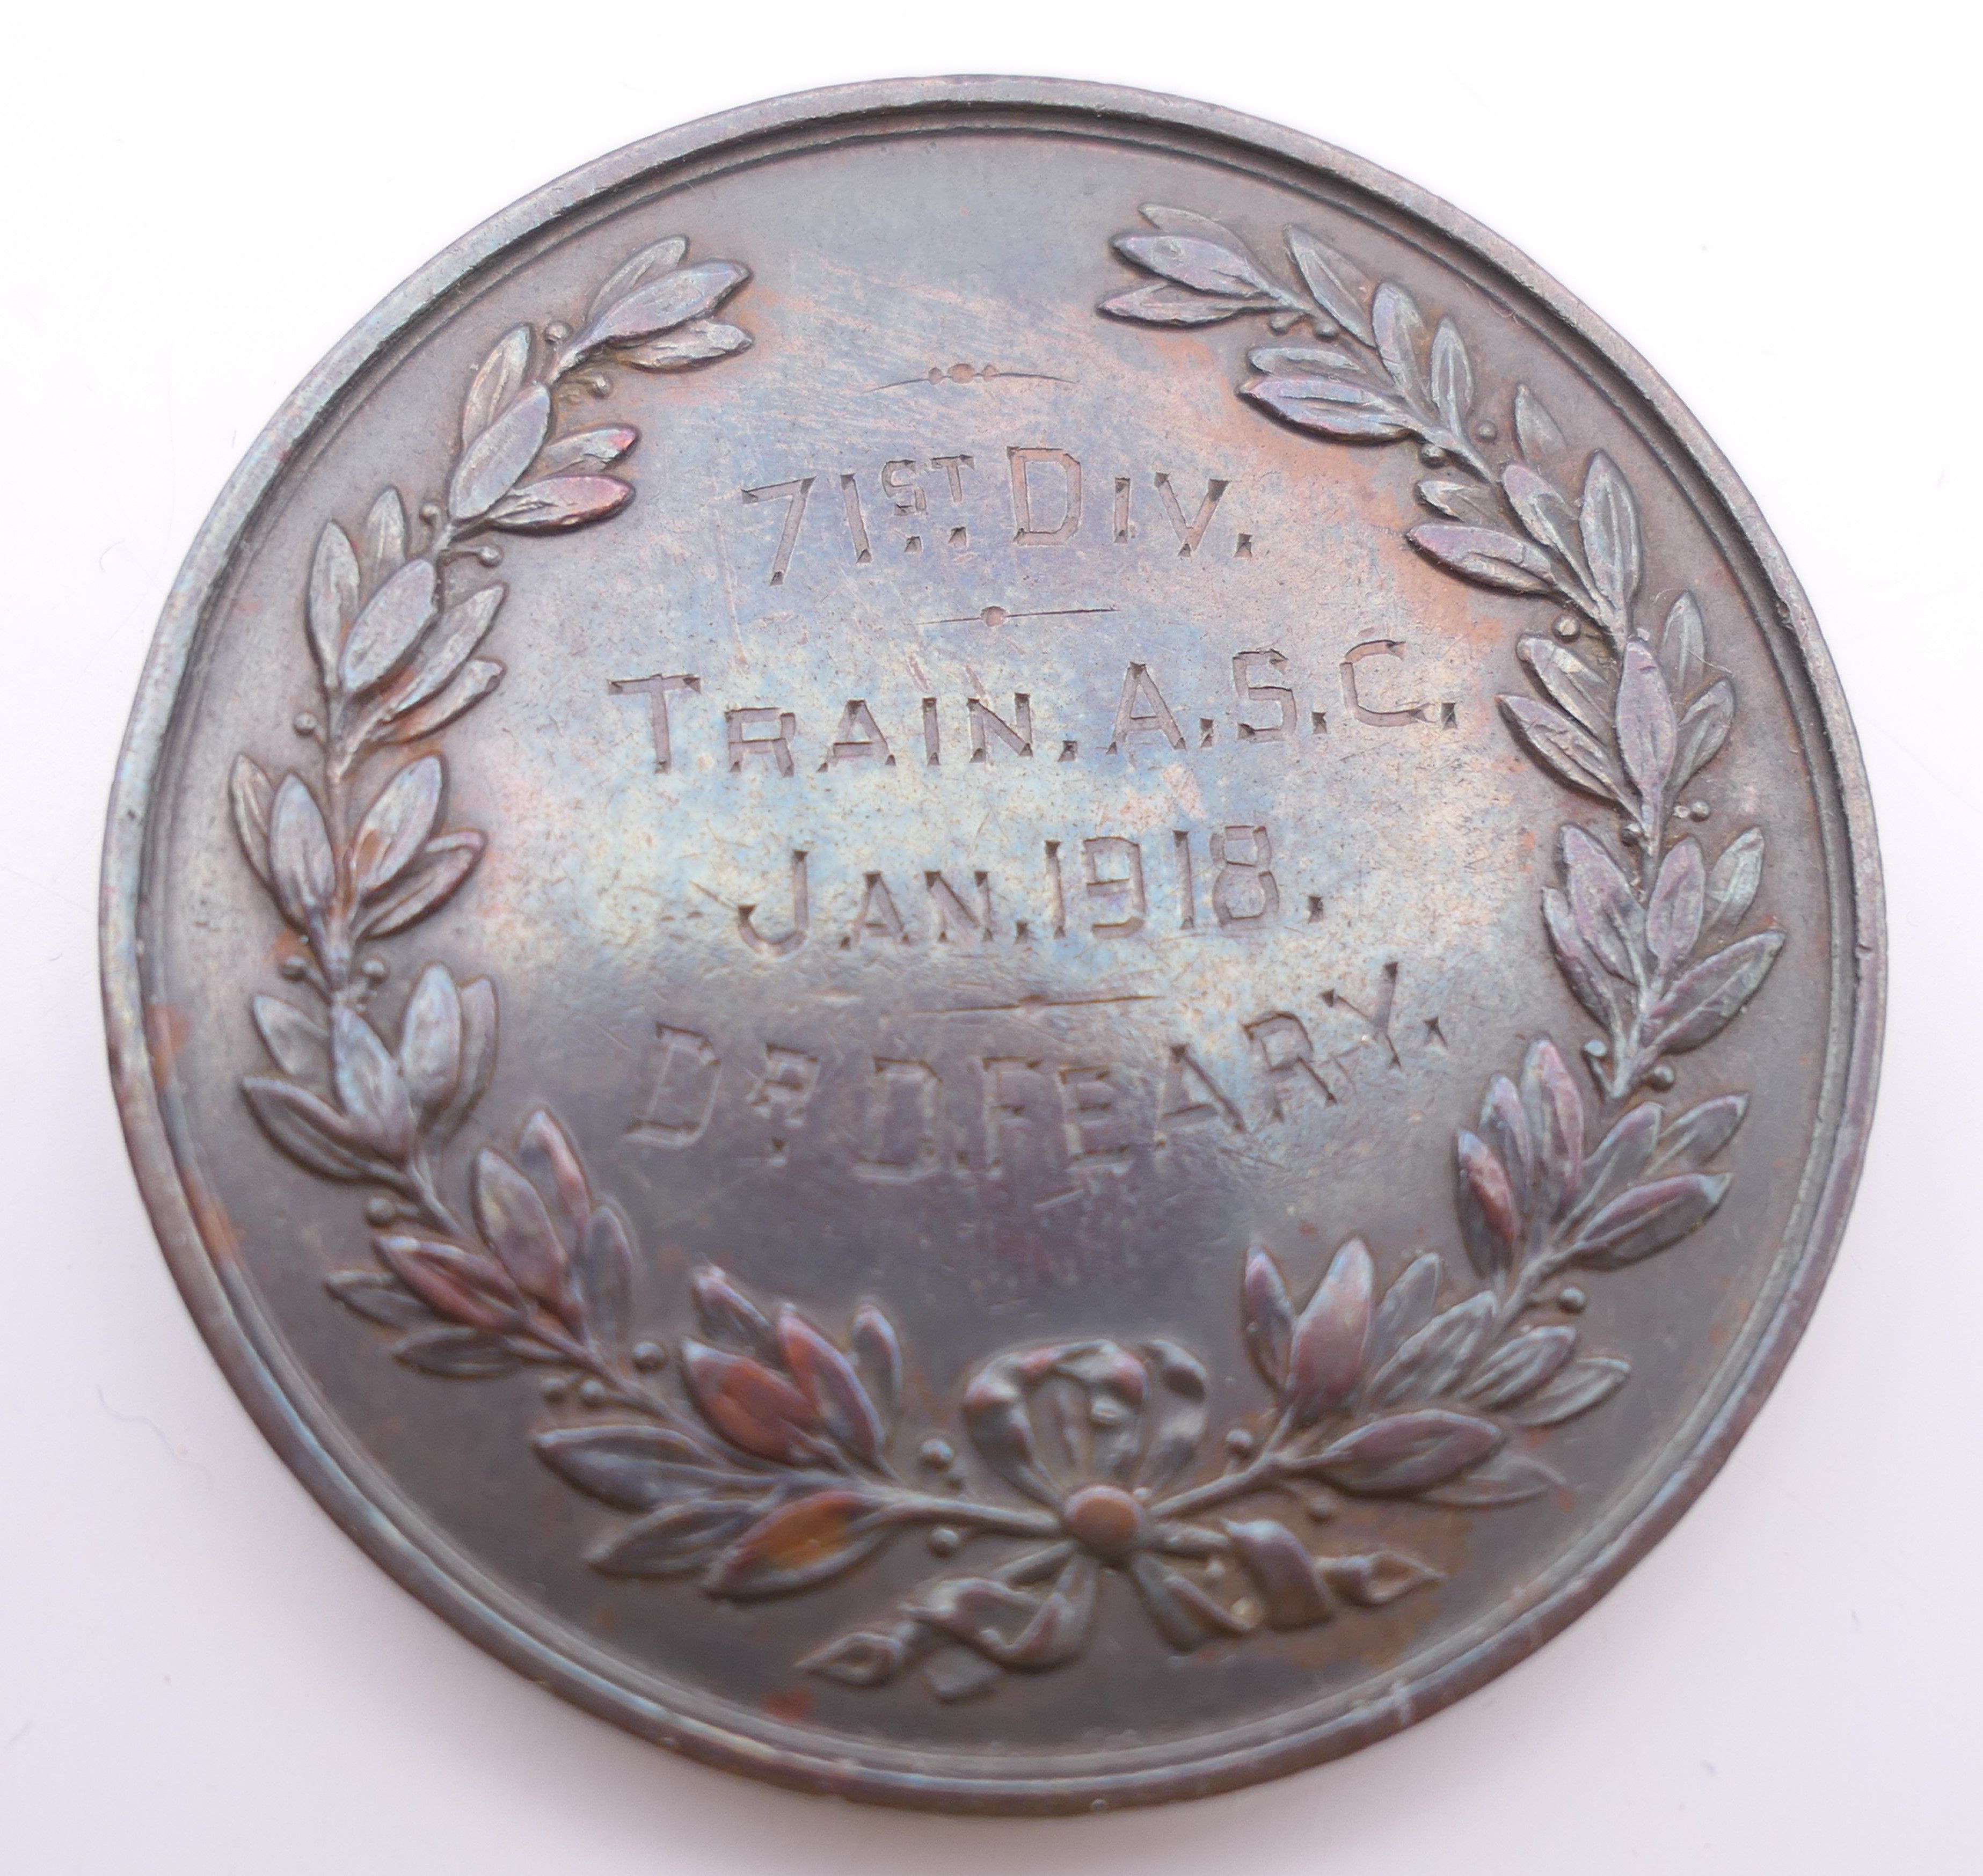 A 1918 Stable Efficiency medal. 3.75 cm diameter. - Image 2 of 3